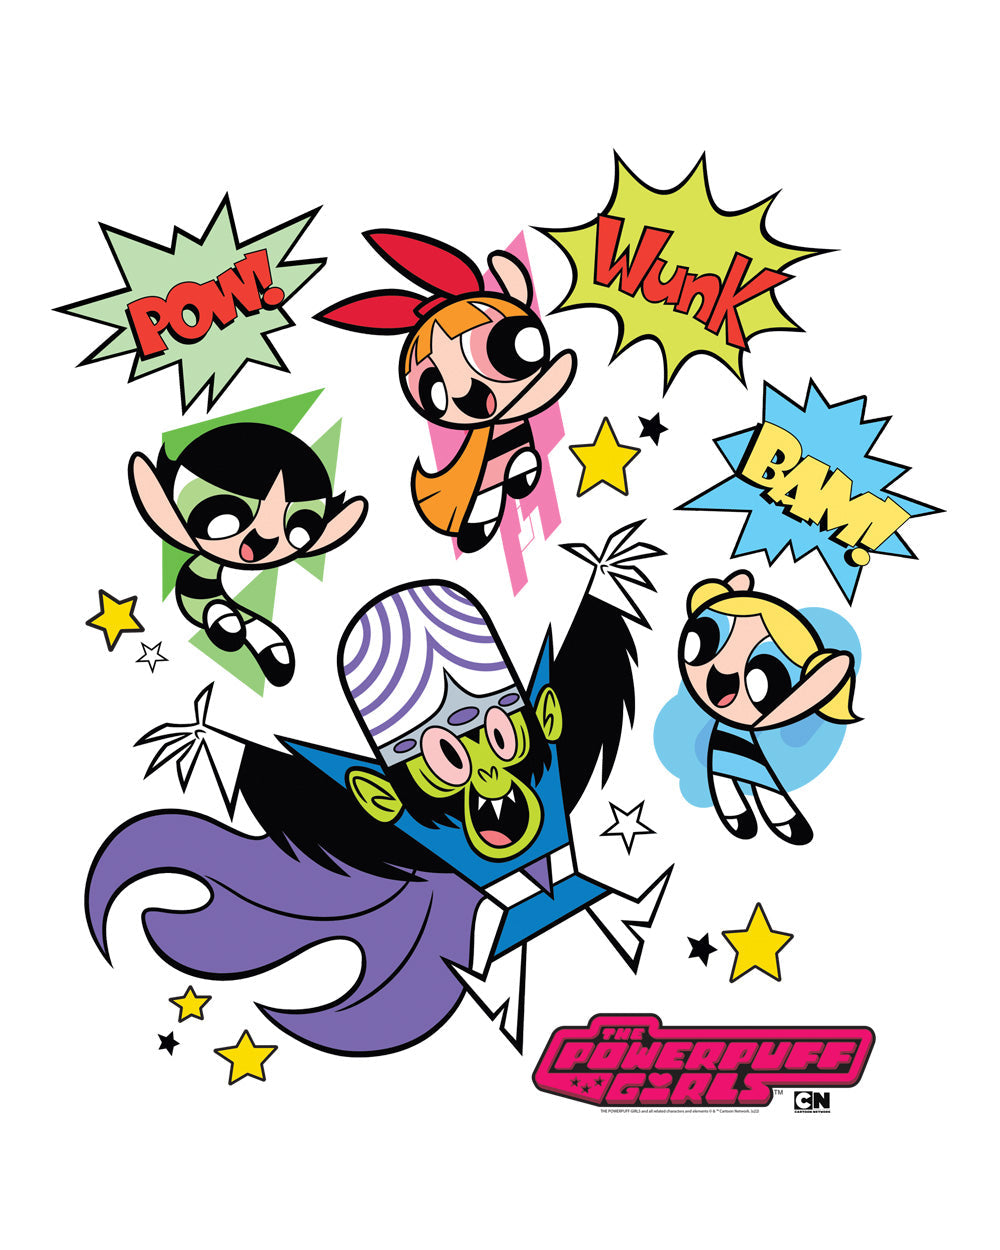 Powerpuff Girls Pow 90s Superhero Cartoon Animation Series Officially Licensed Cotton T-Shirt